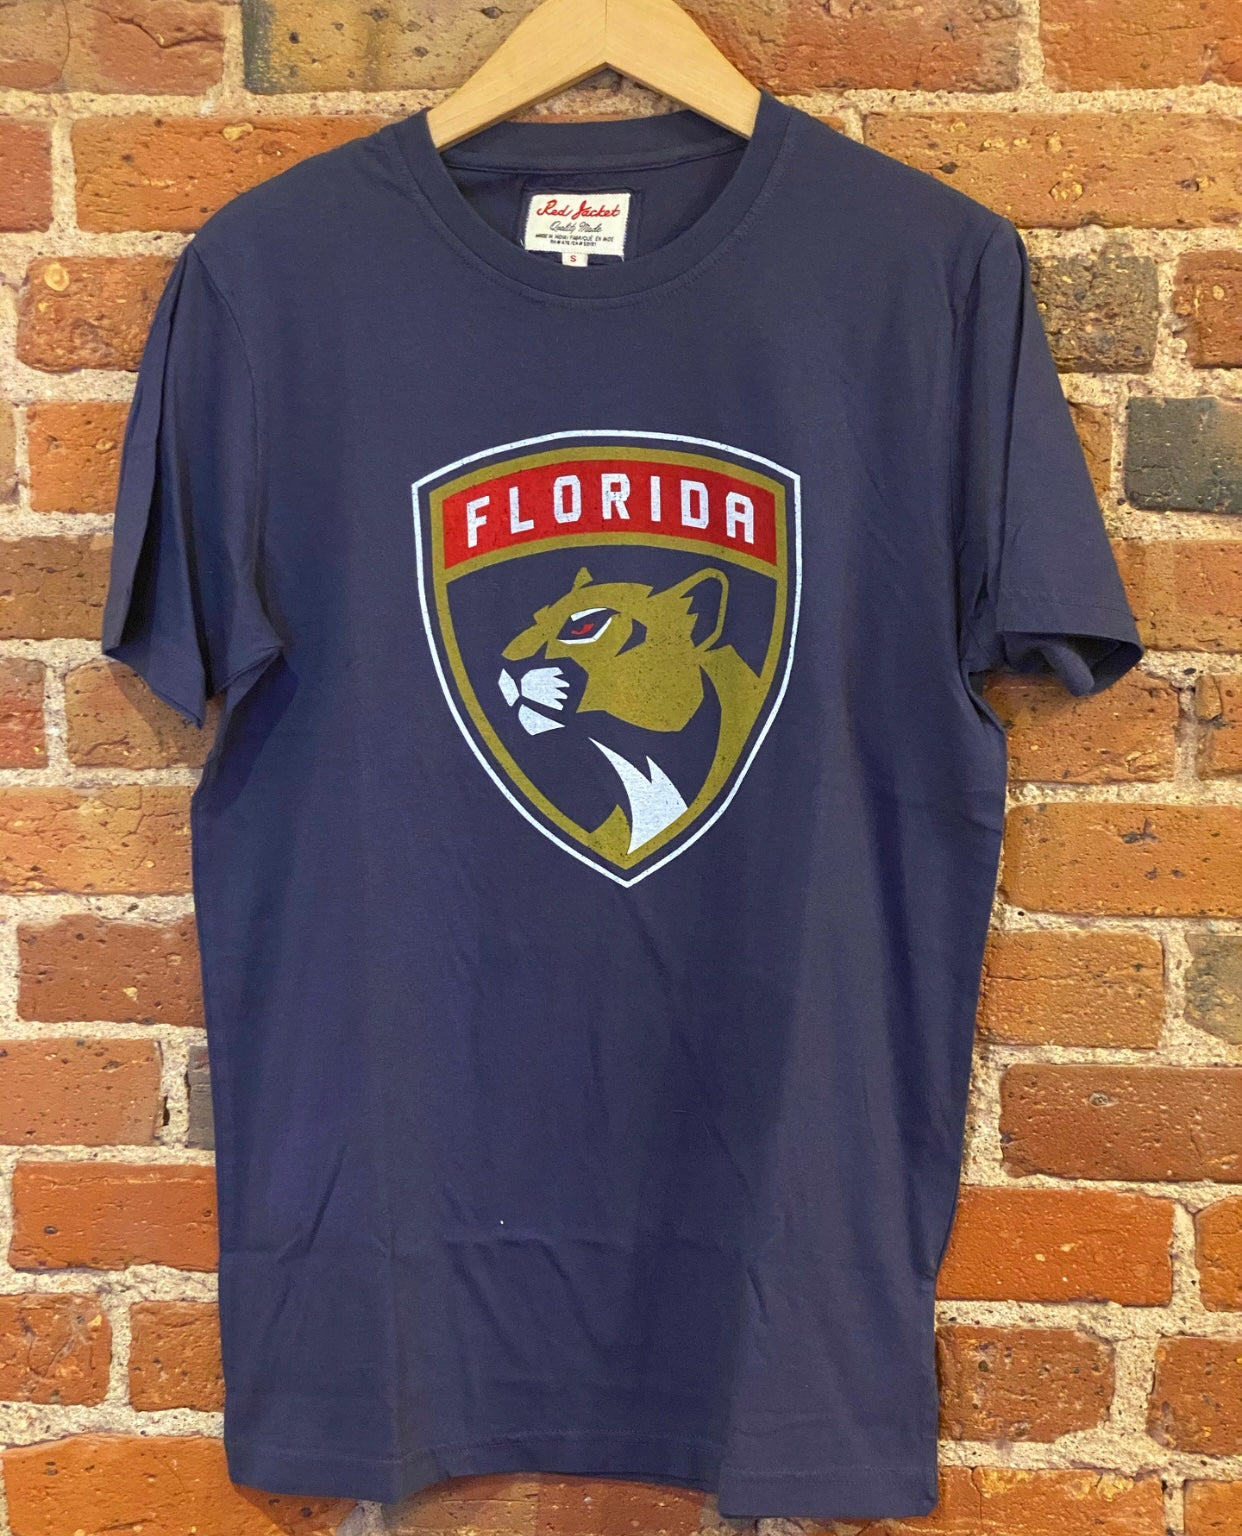 Florida Panthers Brass Tacks Tee - Red Jacket